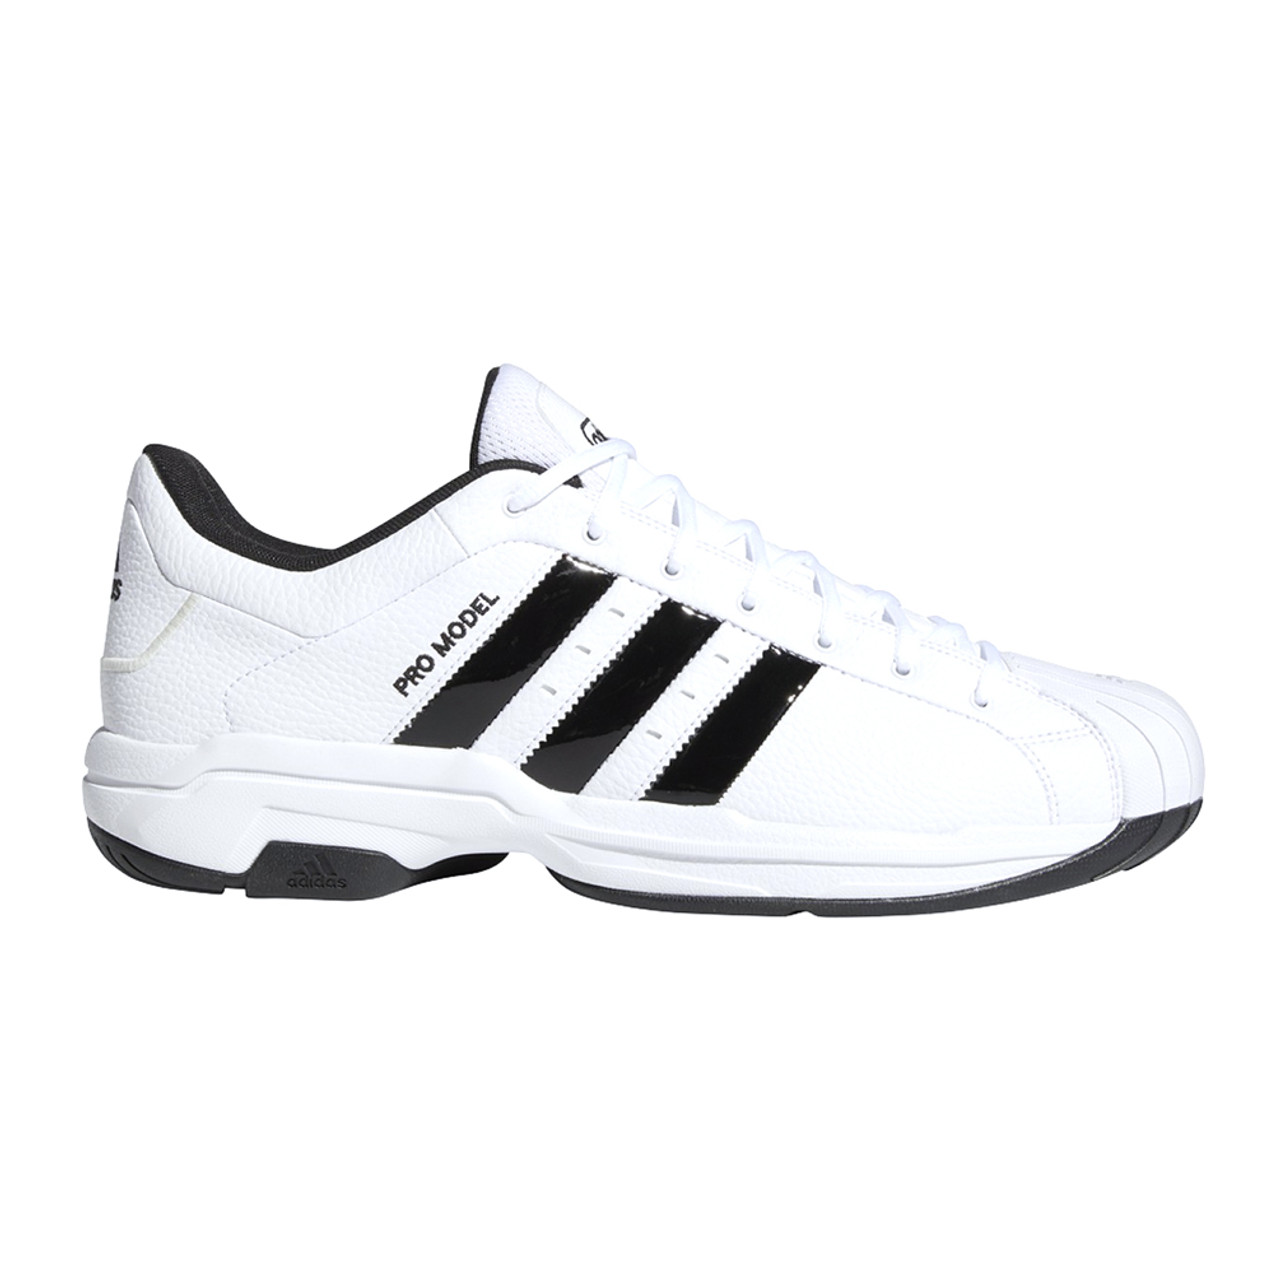 Adidas Unisex-Adult Pro Model 2G Low Basketball Shoe - White | Discount Adidas Unisex Athletic Shoes & More - Shoolu.com |